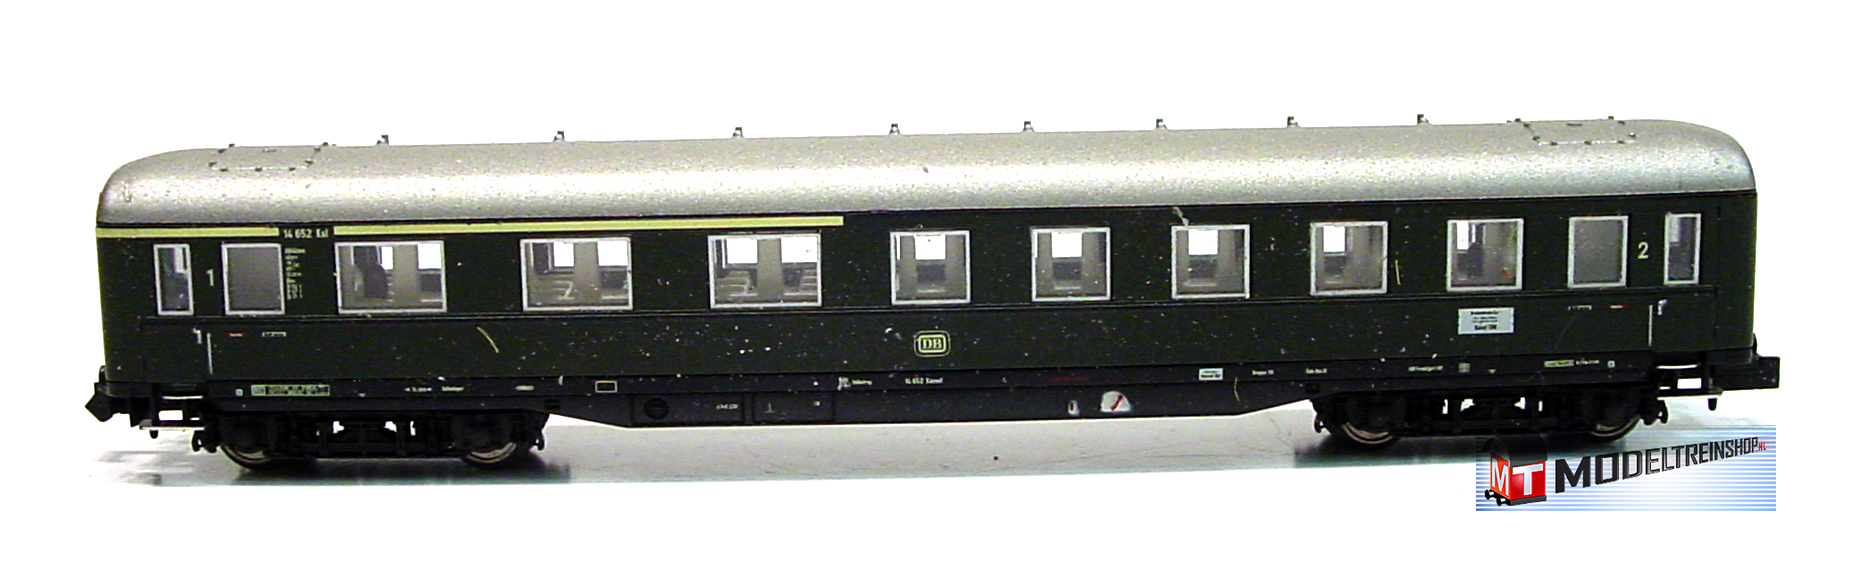 Trix N 15769-14 Reizigersrijtuig 1/2 klasse - Modeltreinshop